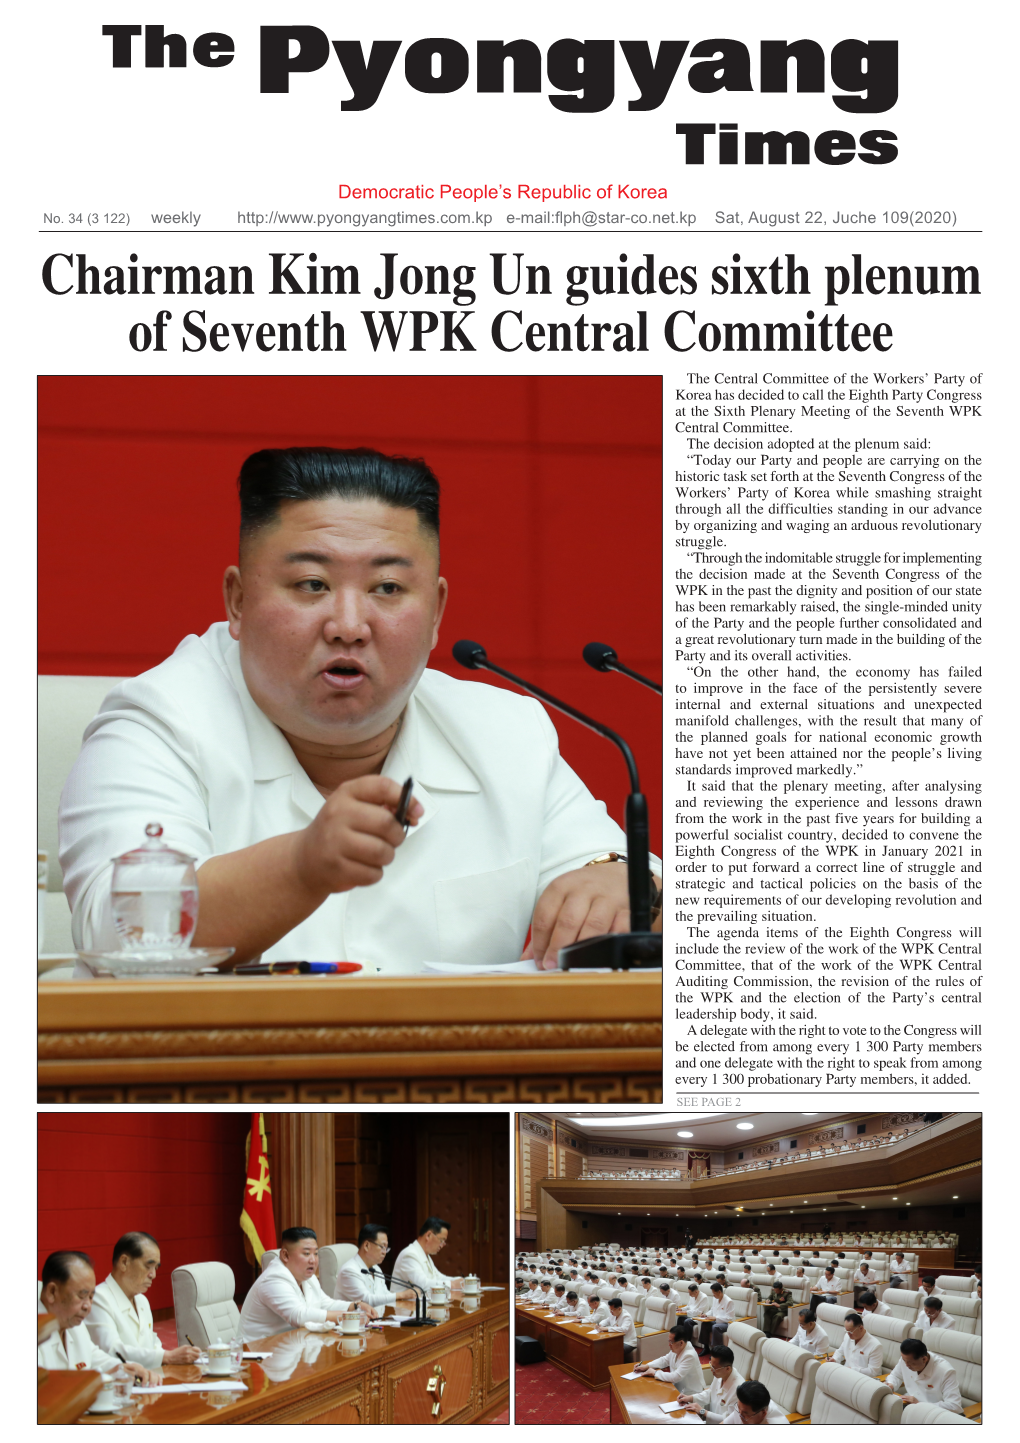 Chairman Kim Jong Un Guides Sixth Plenum of Seventh WPK Central